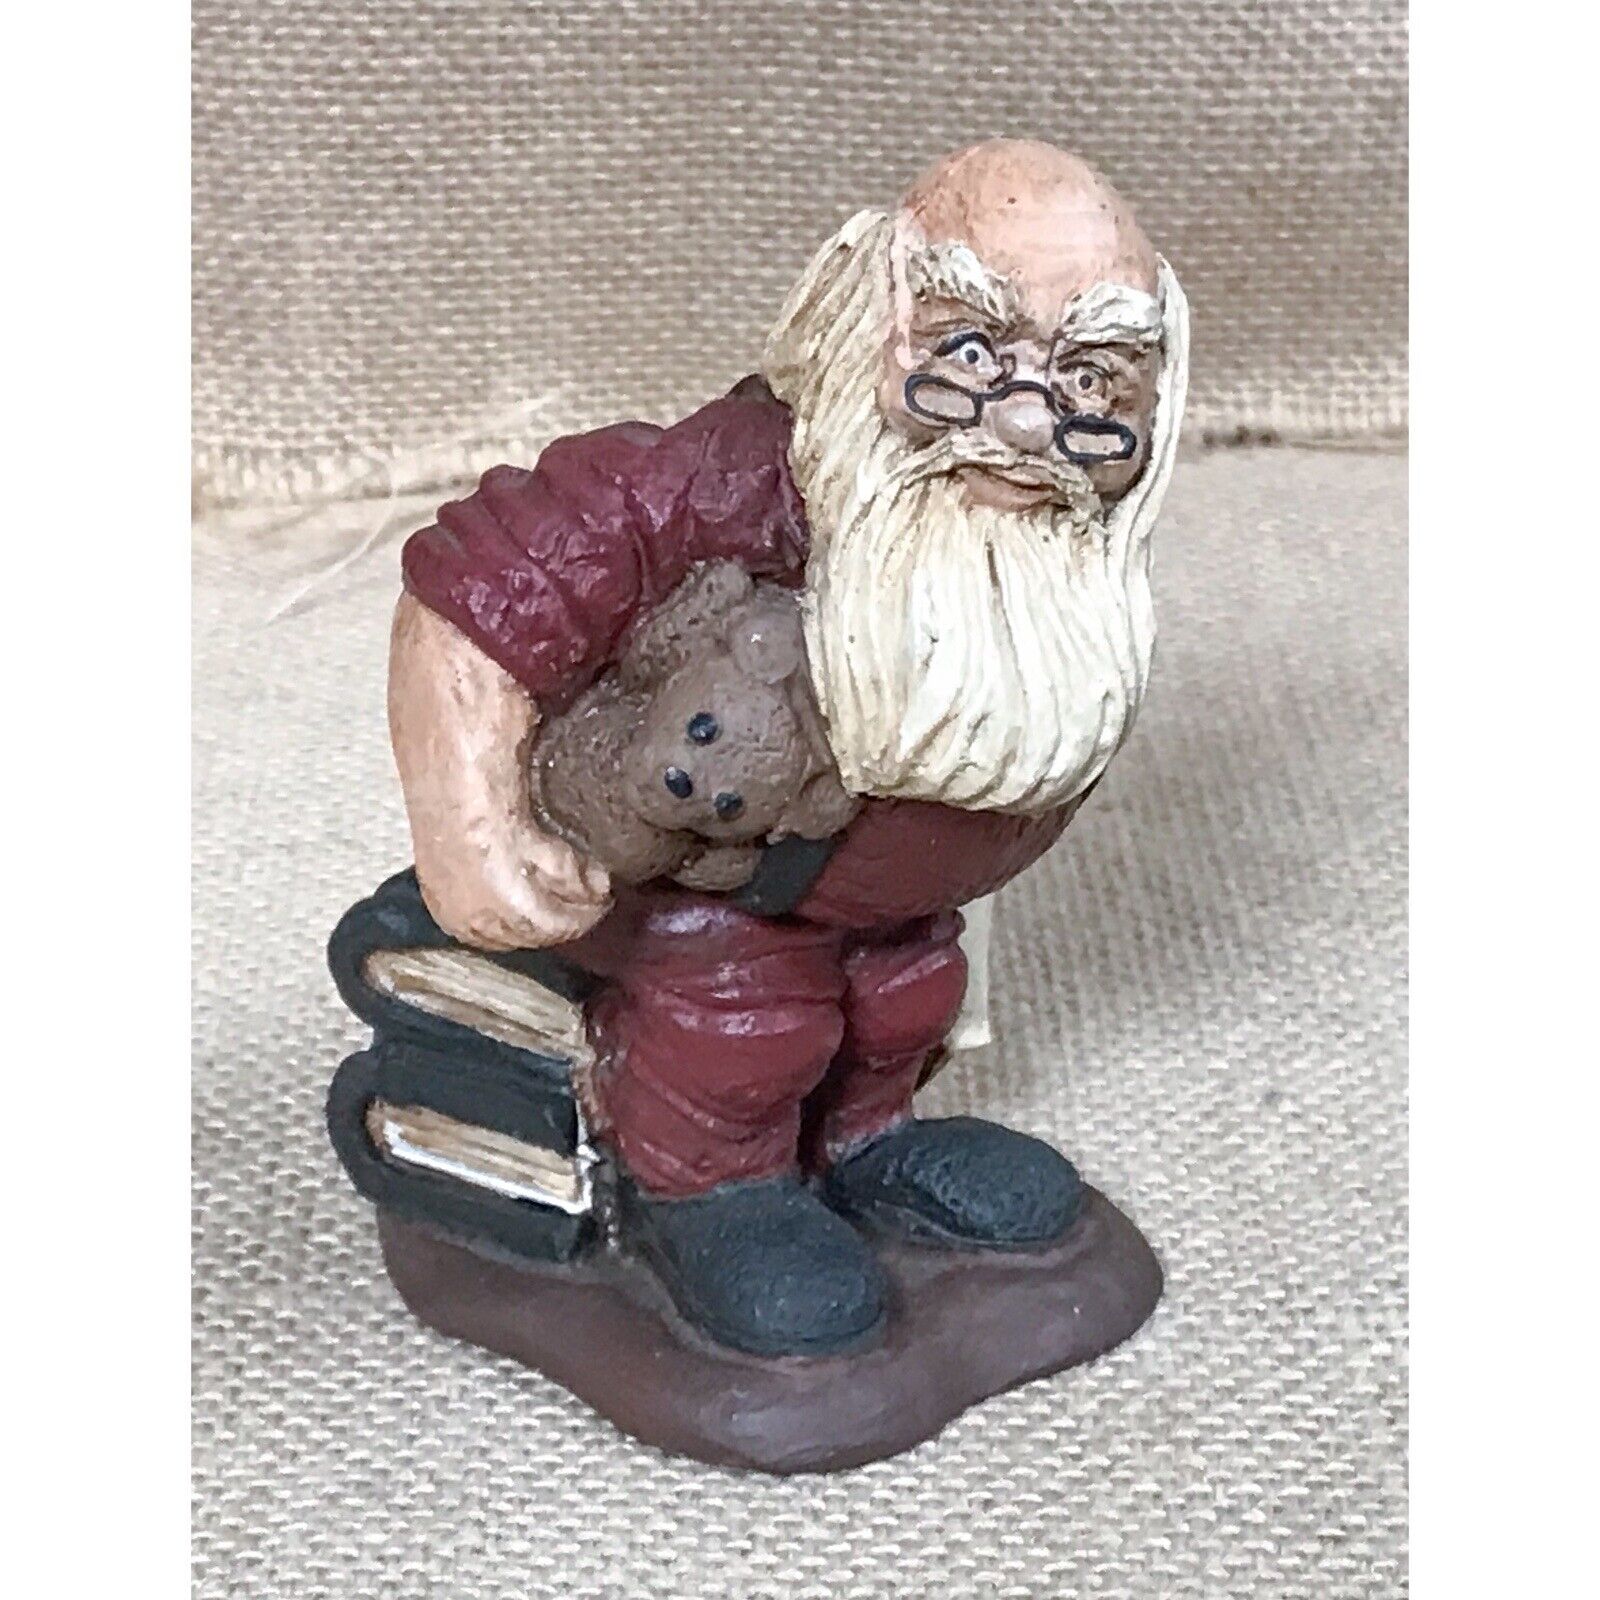 Rustic Primitive Christmas Resin Santa Claus Sitting On Books Figurine Holiday